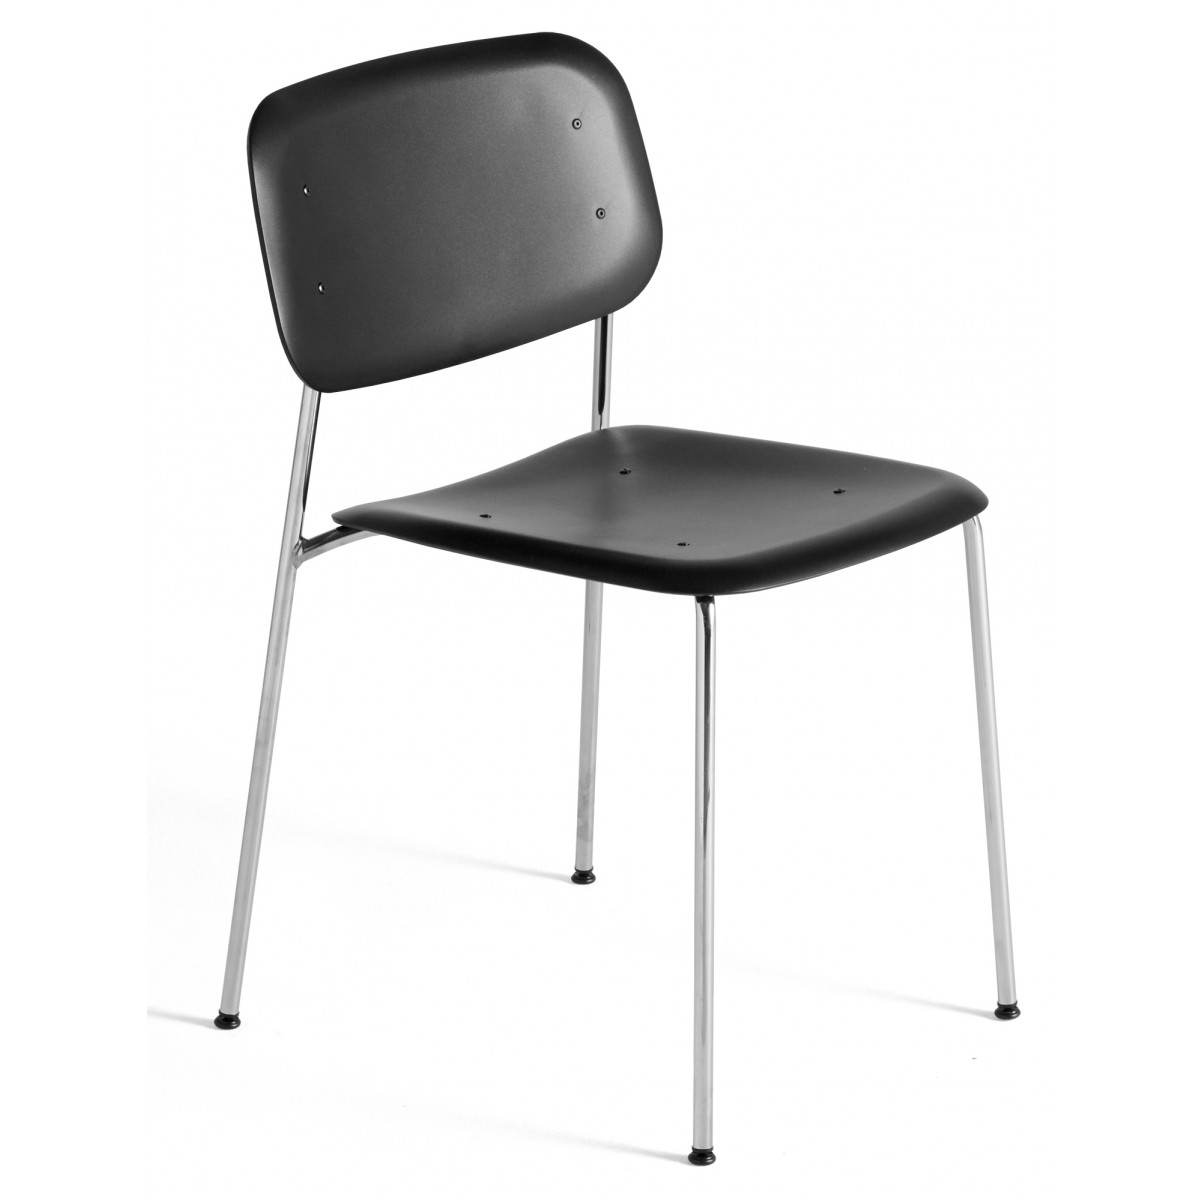 black + chromed legs - Soft Edge 45 polypropylene chair